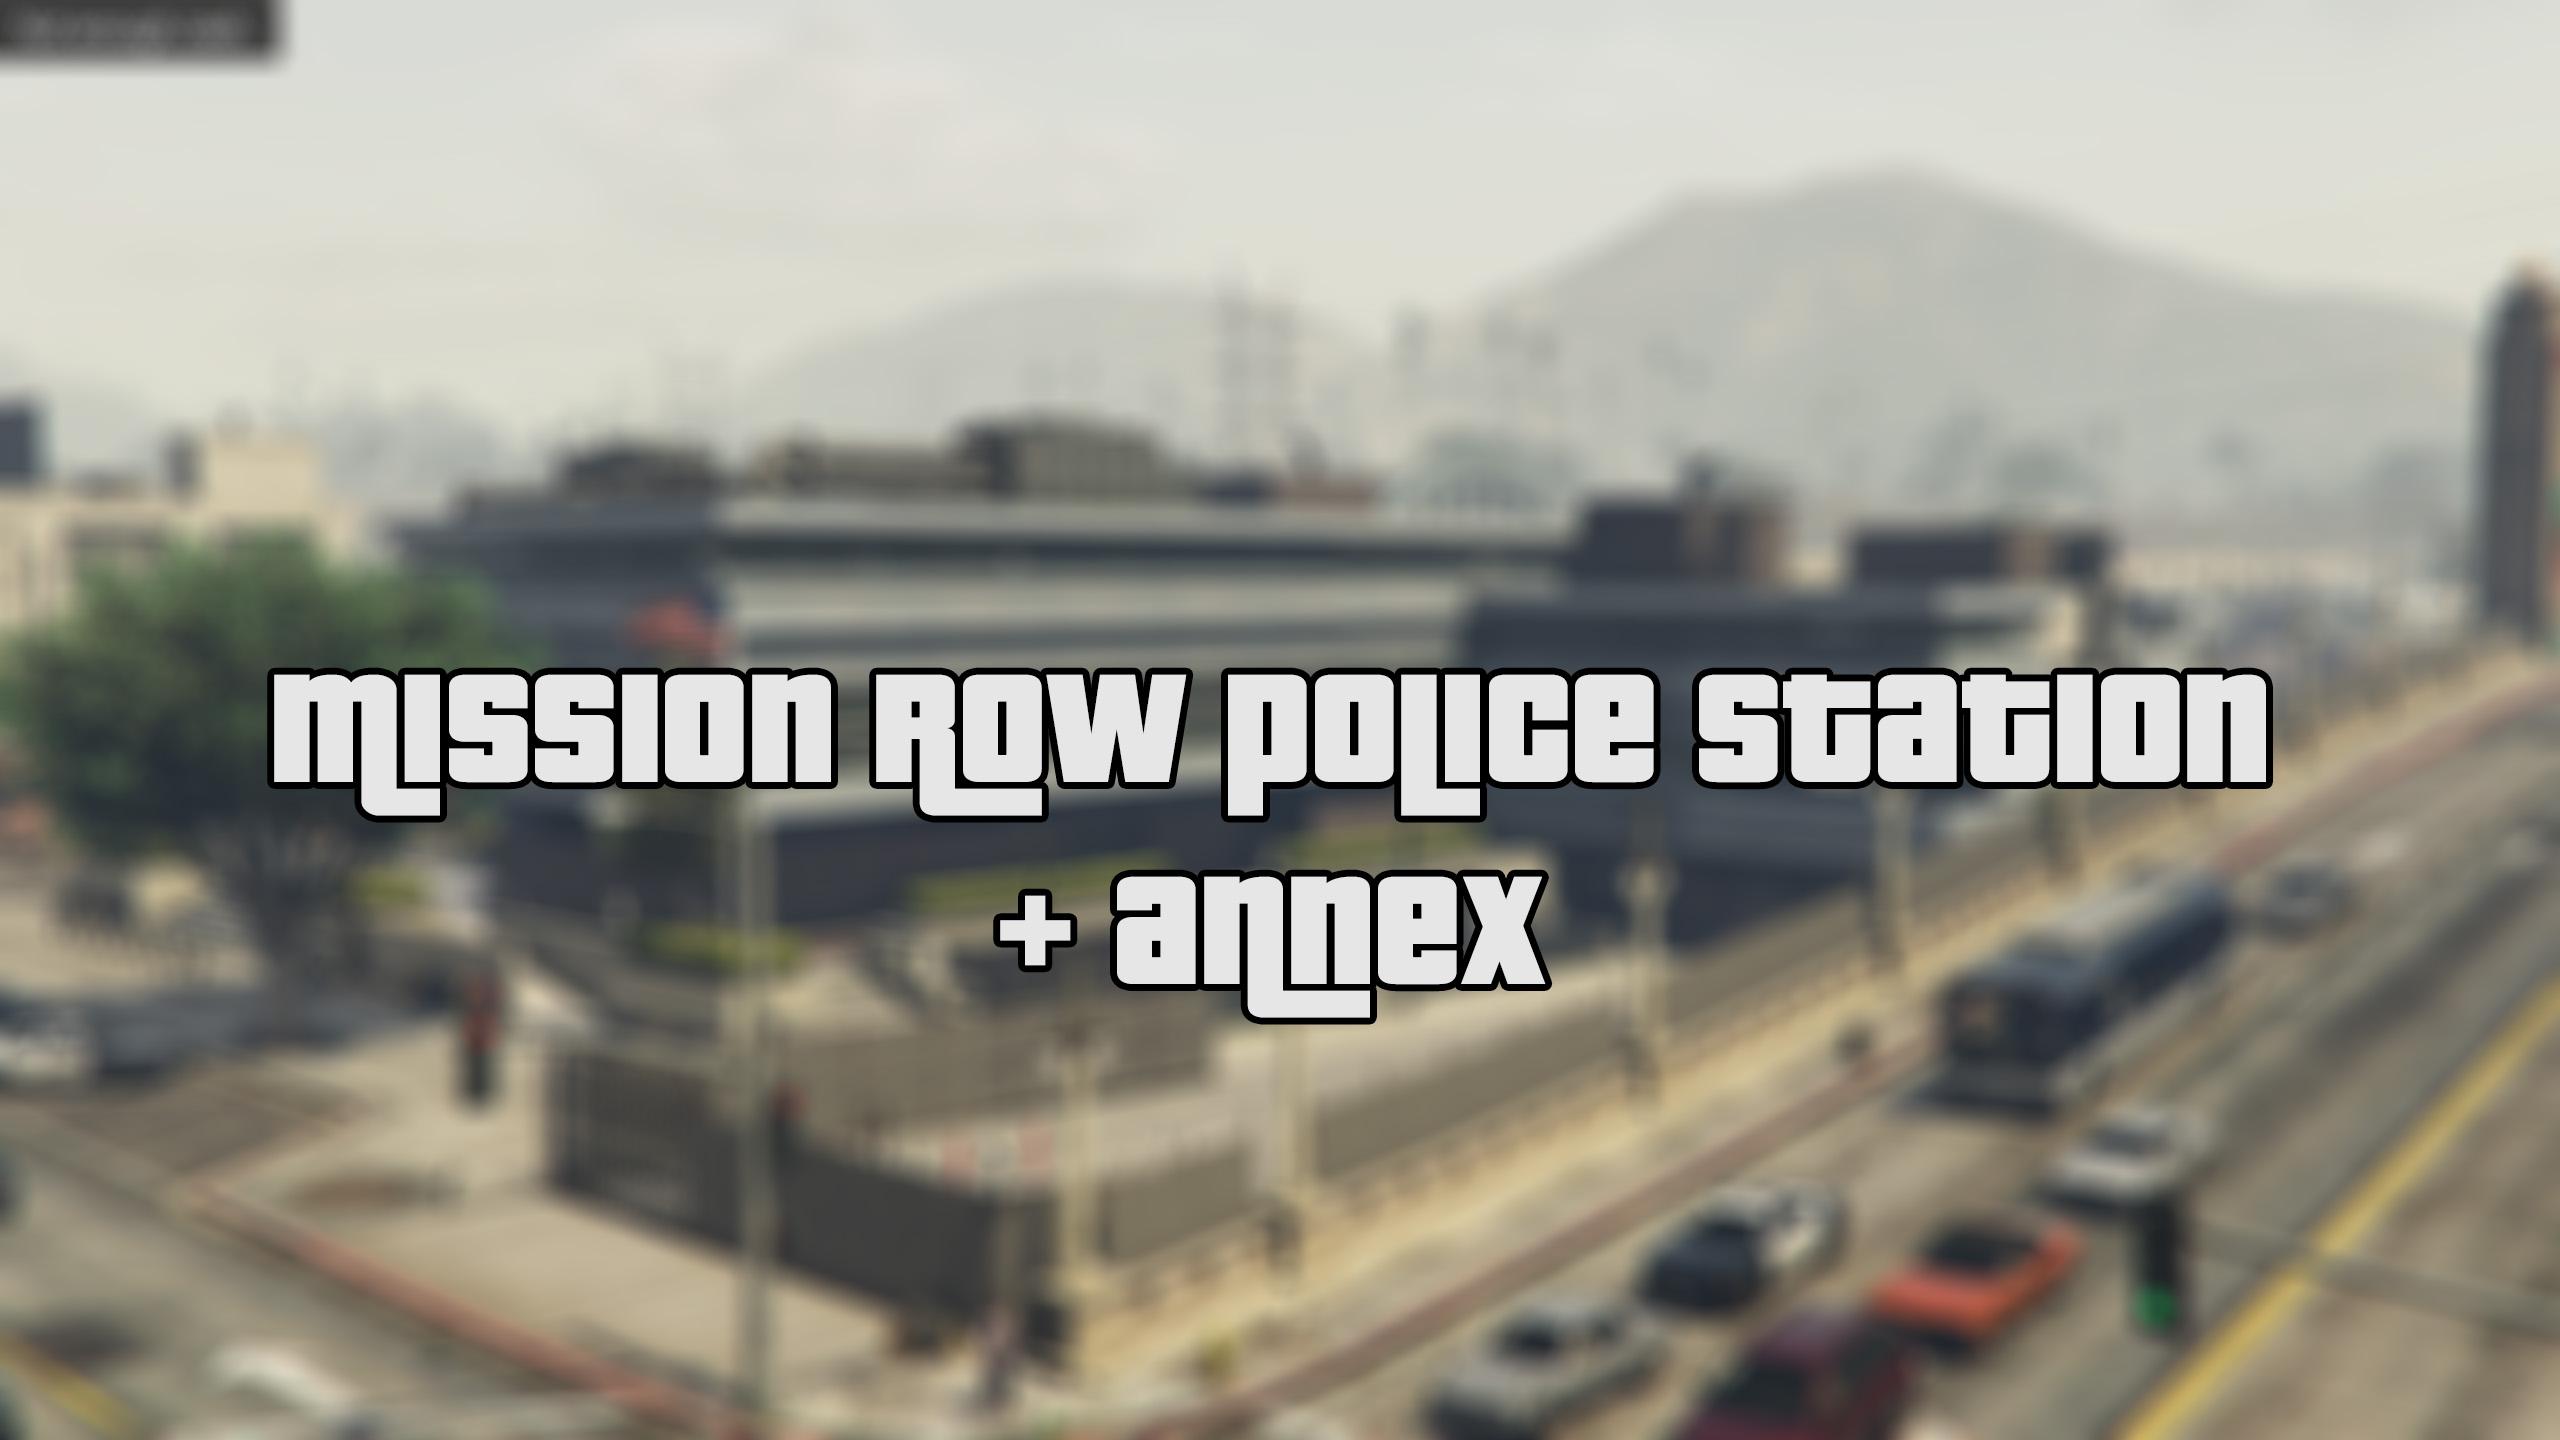 Popular Street Police Station - GTA5-Mods.com